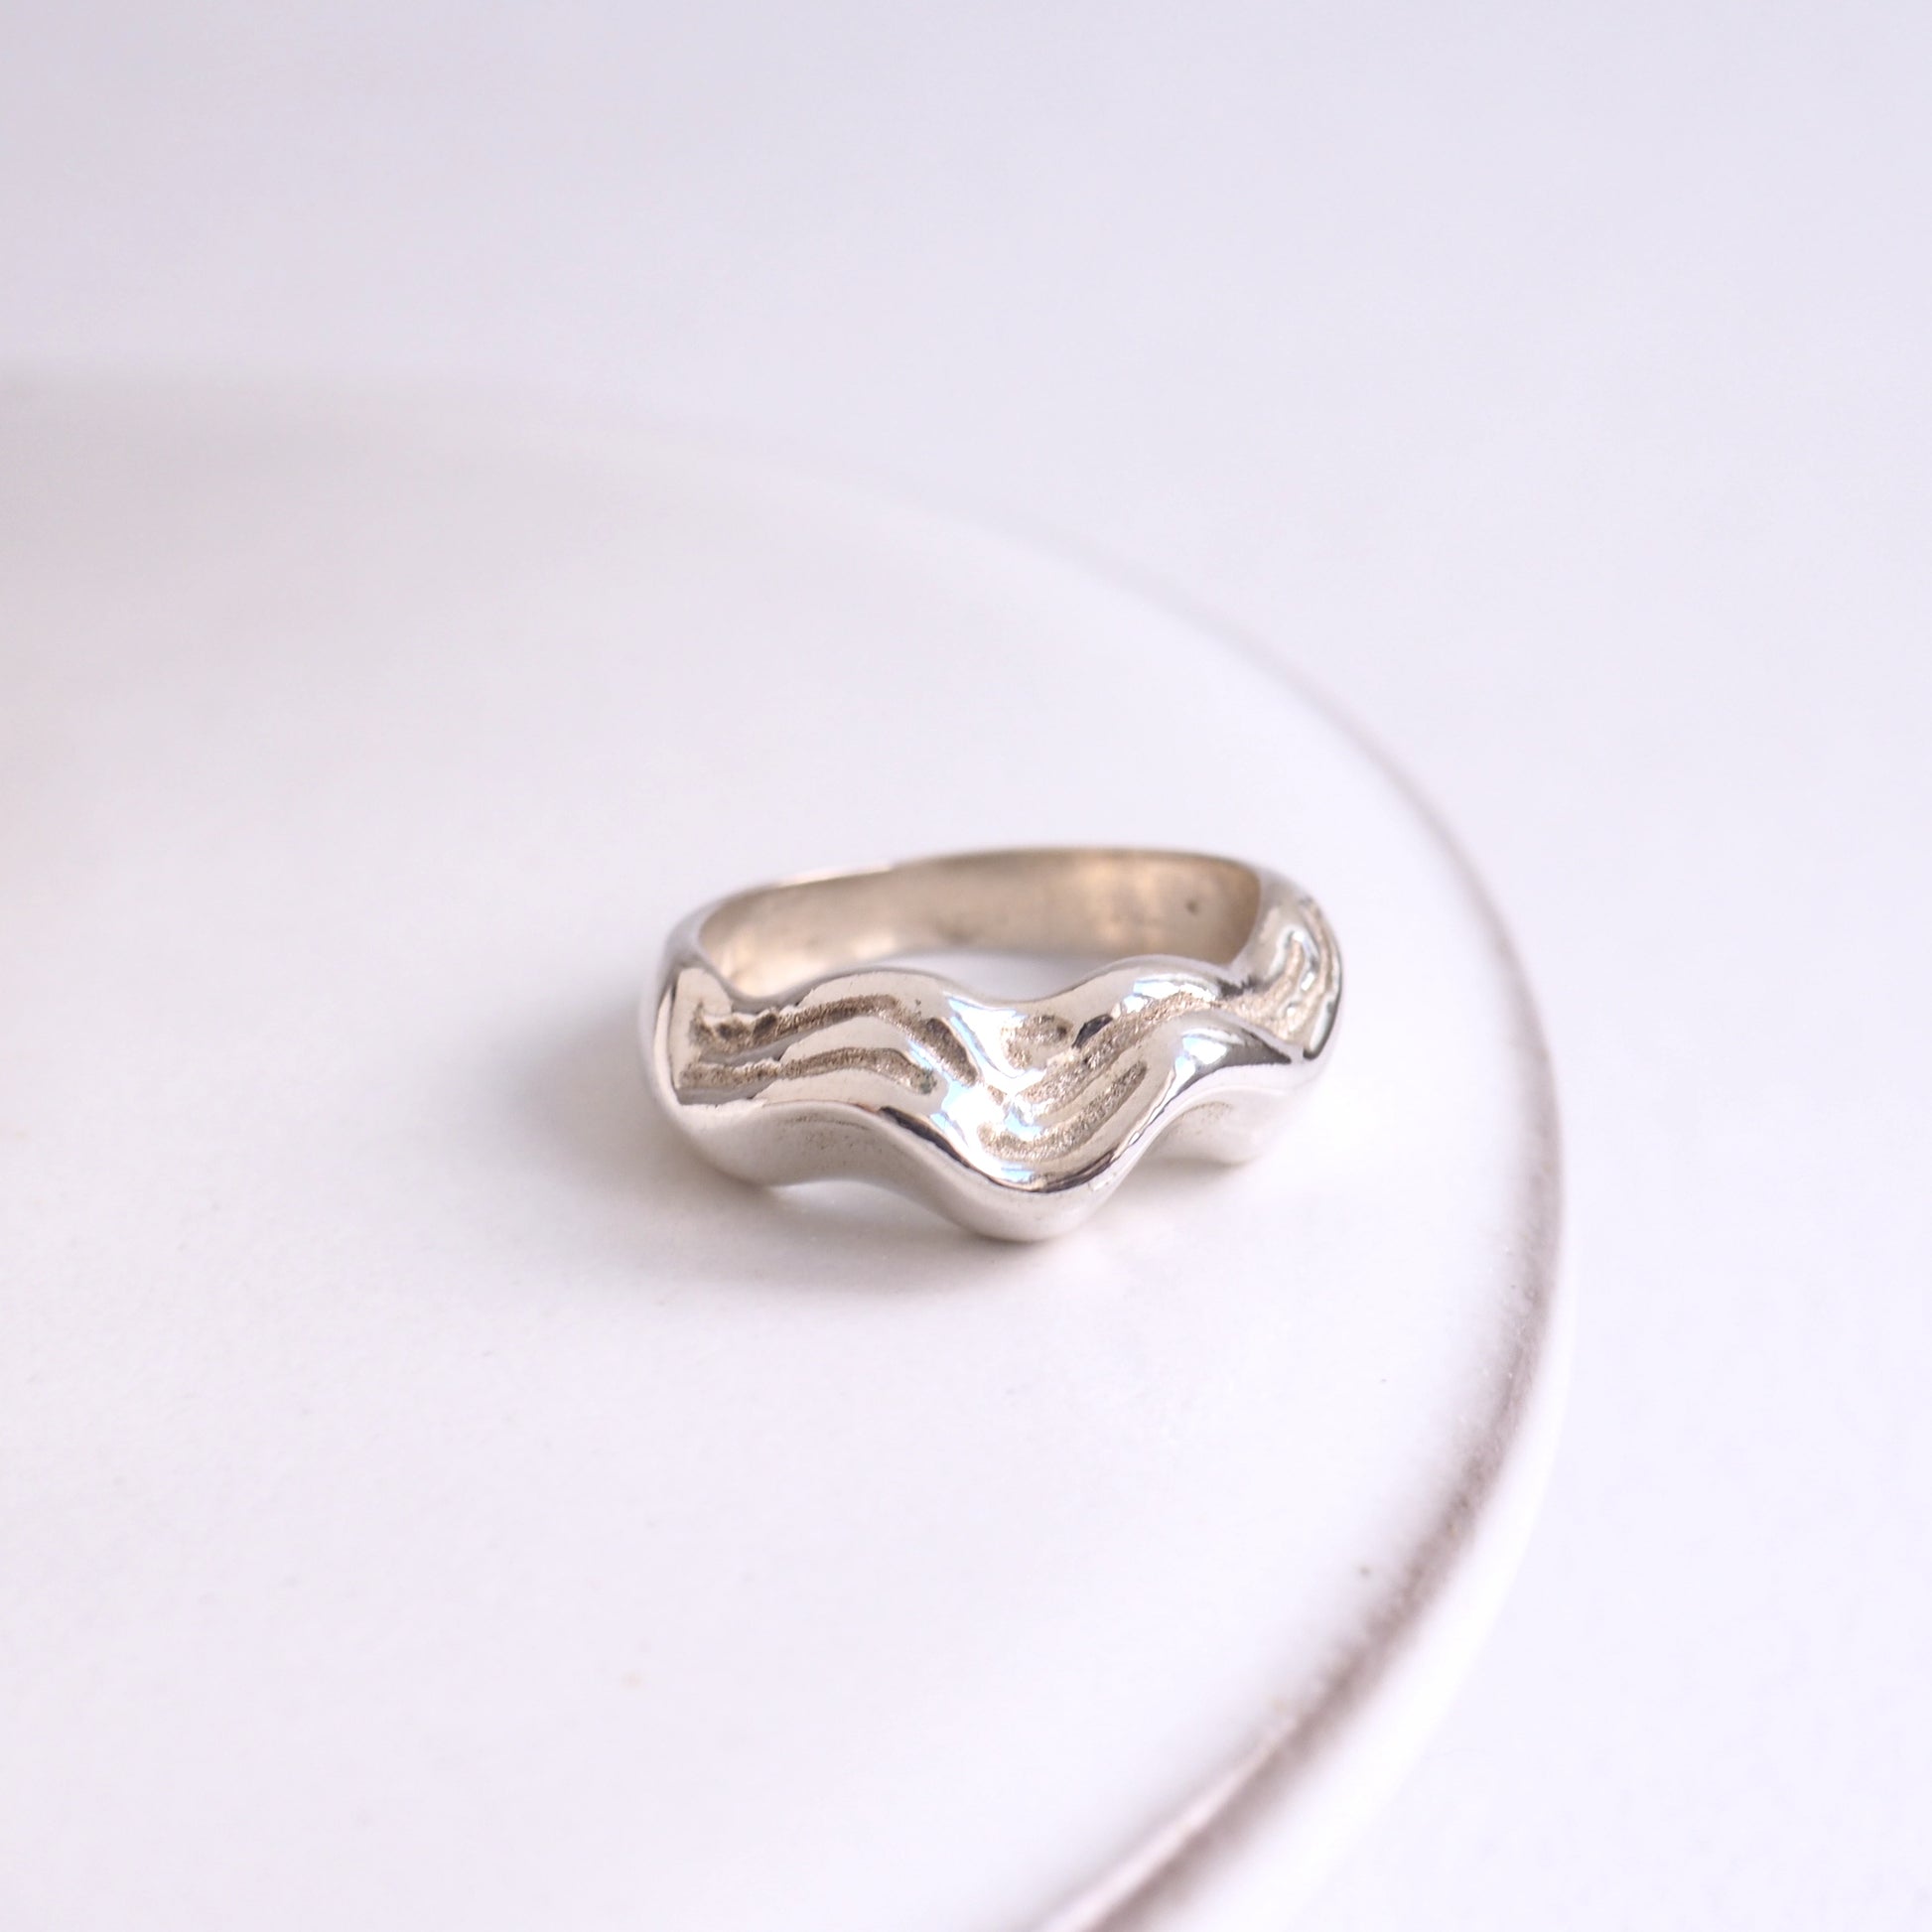  jewelry ring silver gold handmade handcrafted fashion custom bespoke 